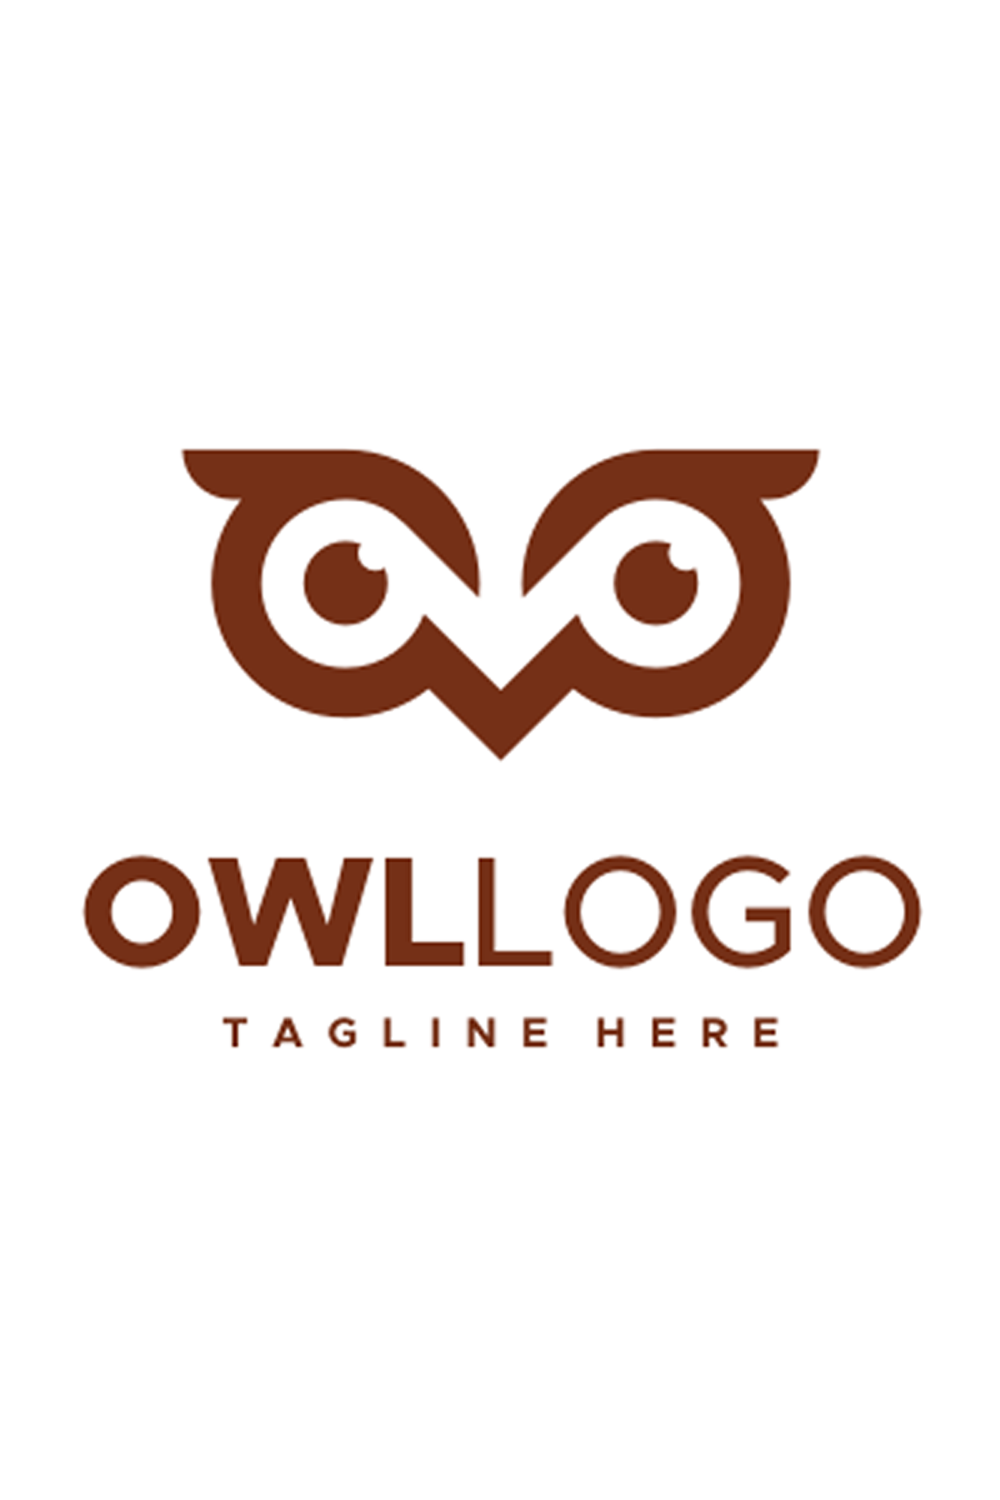 Owl Eyes Logo Template pinterest image.